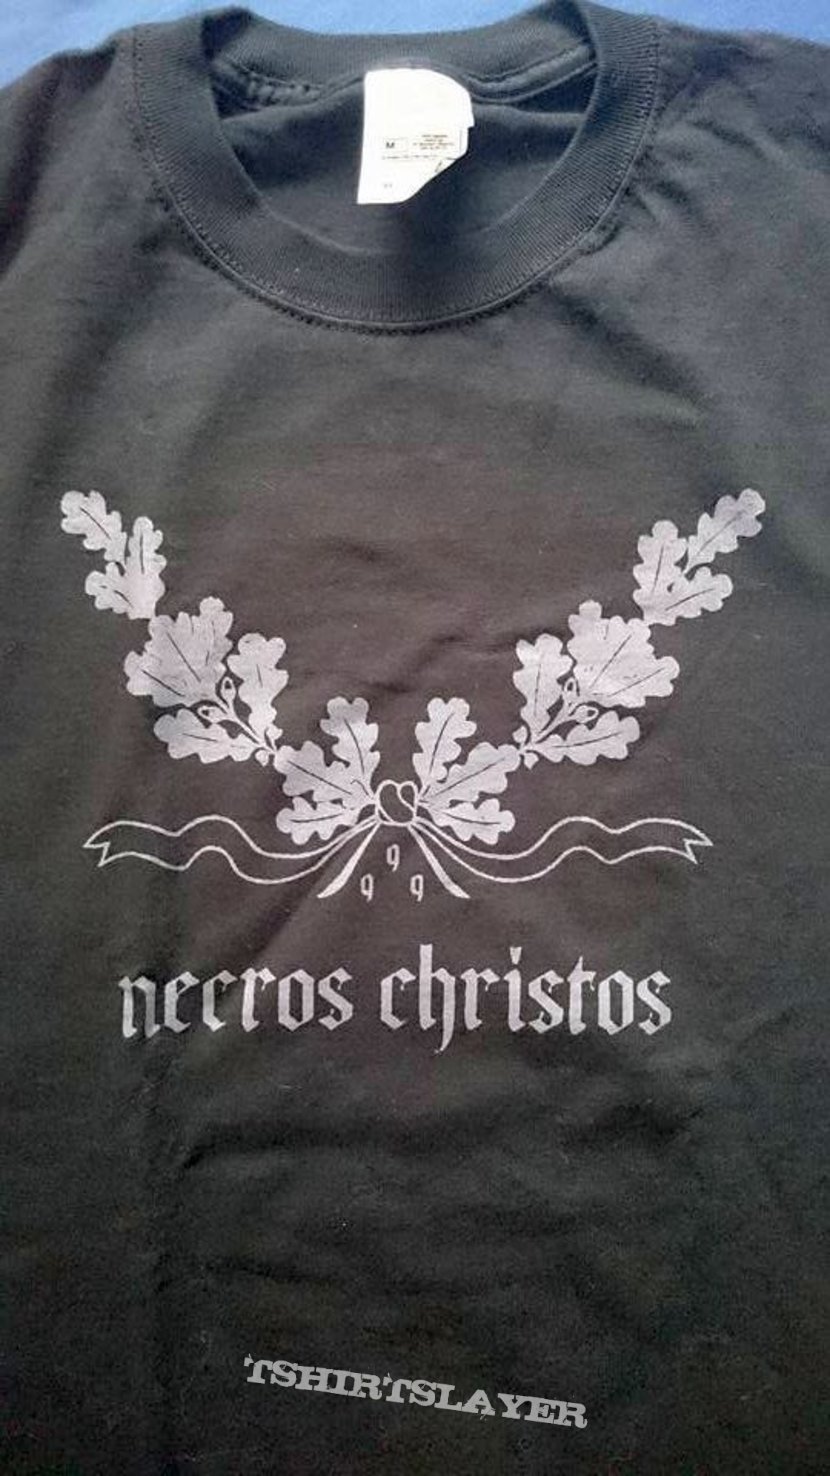 Necros Christos Shirt